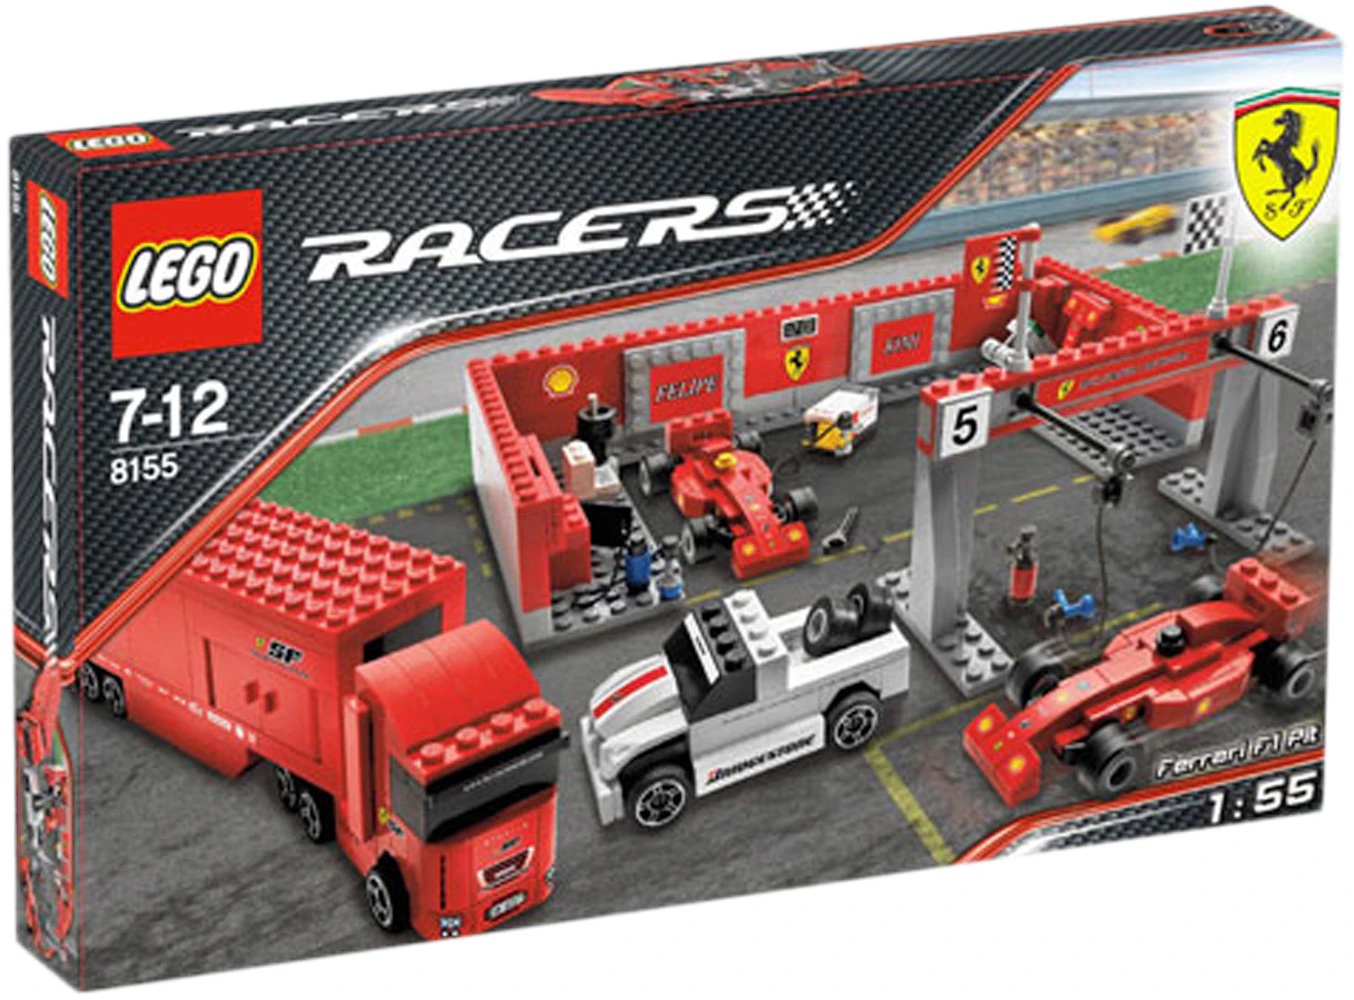 https://images.stockx.com/images/LEGO-Racers-Ferrari-F1-Pit-Set-8155.jpg?fit=fill&bg=FFFFFF&w=700&h=500&fm=webp&auto=compress&q=90&dpr=2&trim=color&updated_at=1643060541